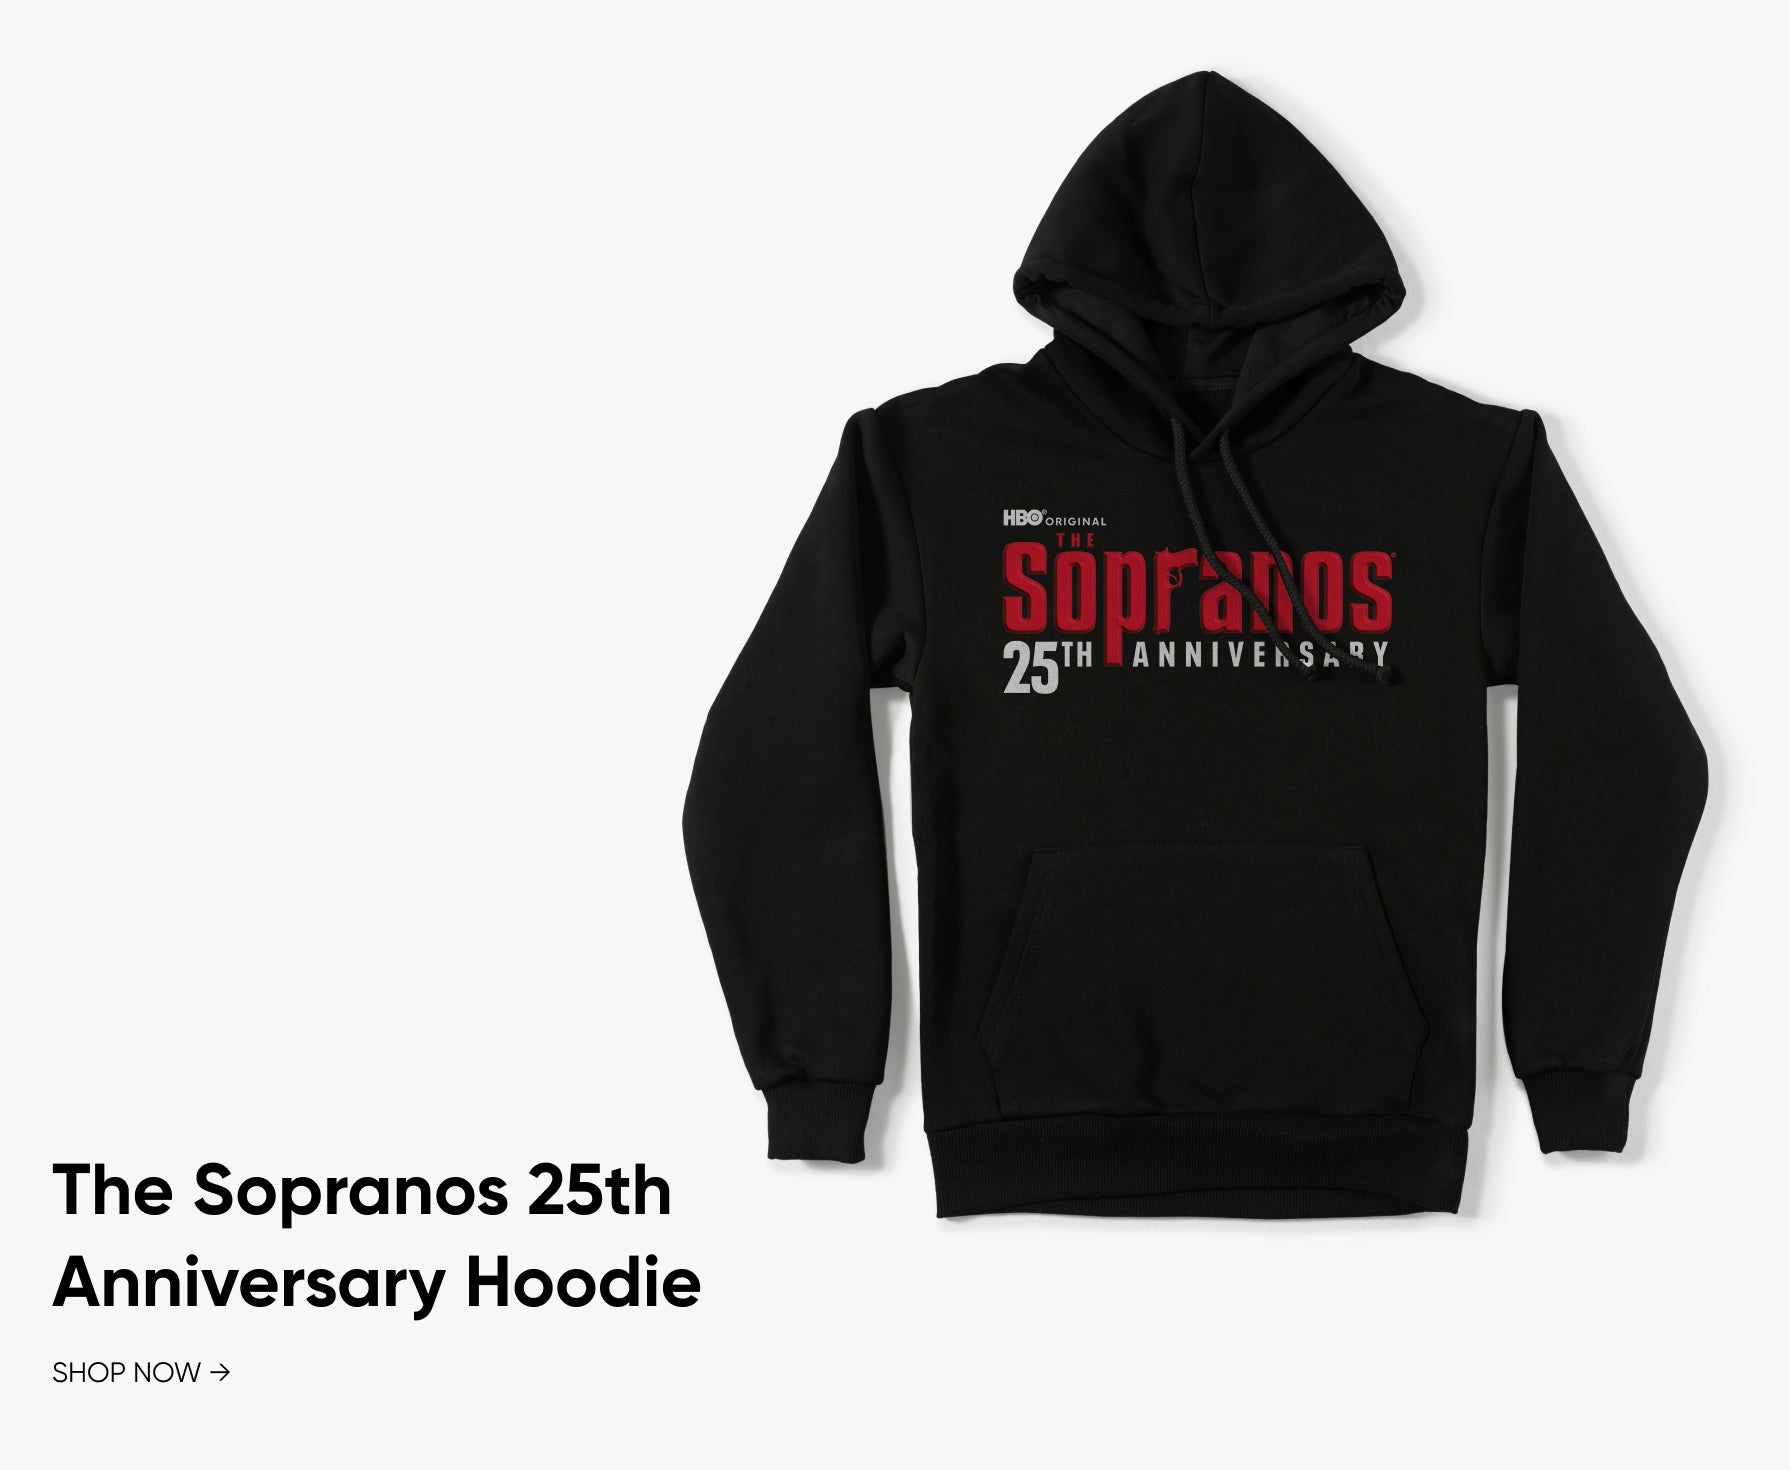 The Sopranos 25th Anniversary Hoodie